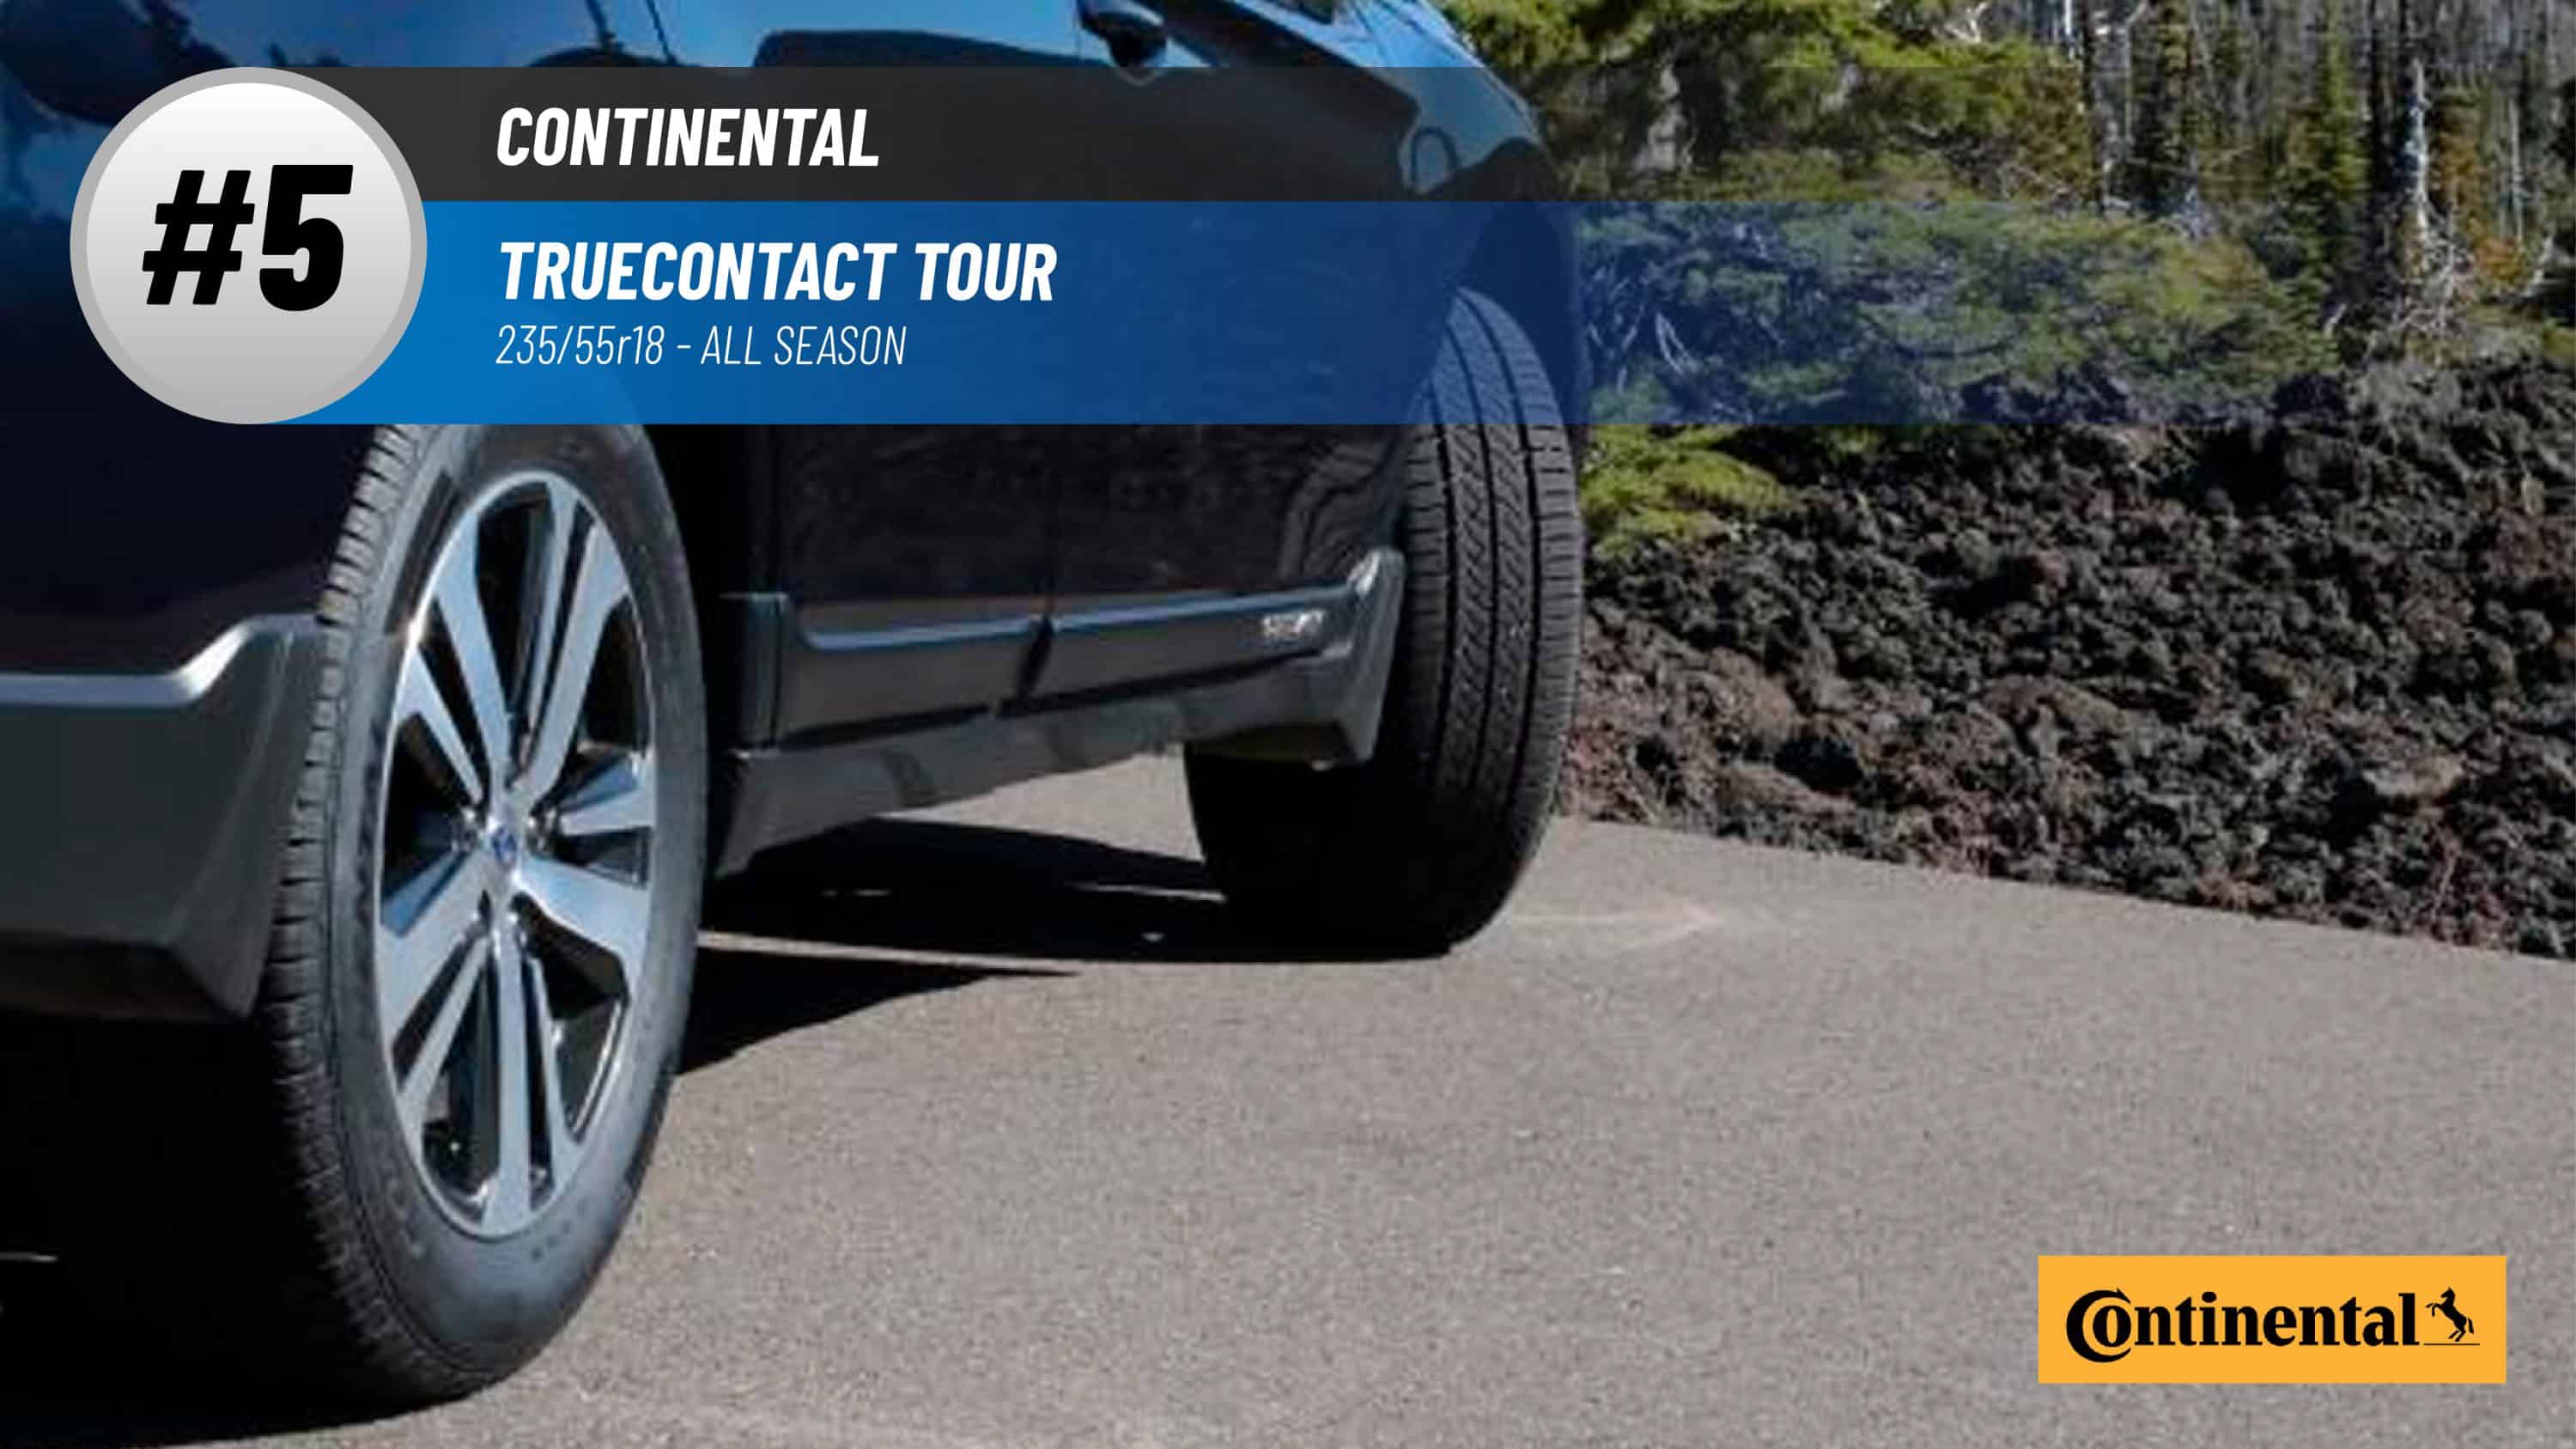 Top #5 All Season Tires: Continental TrueContact Tour –best 235/55r18